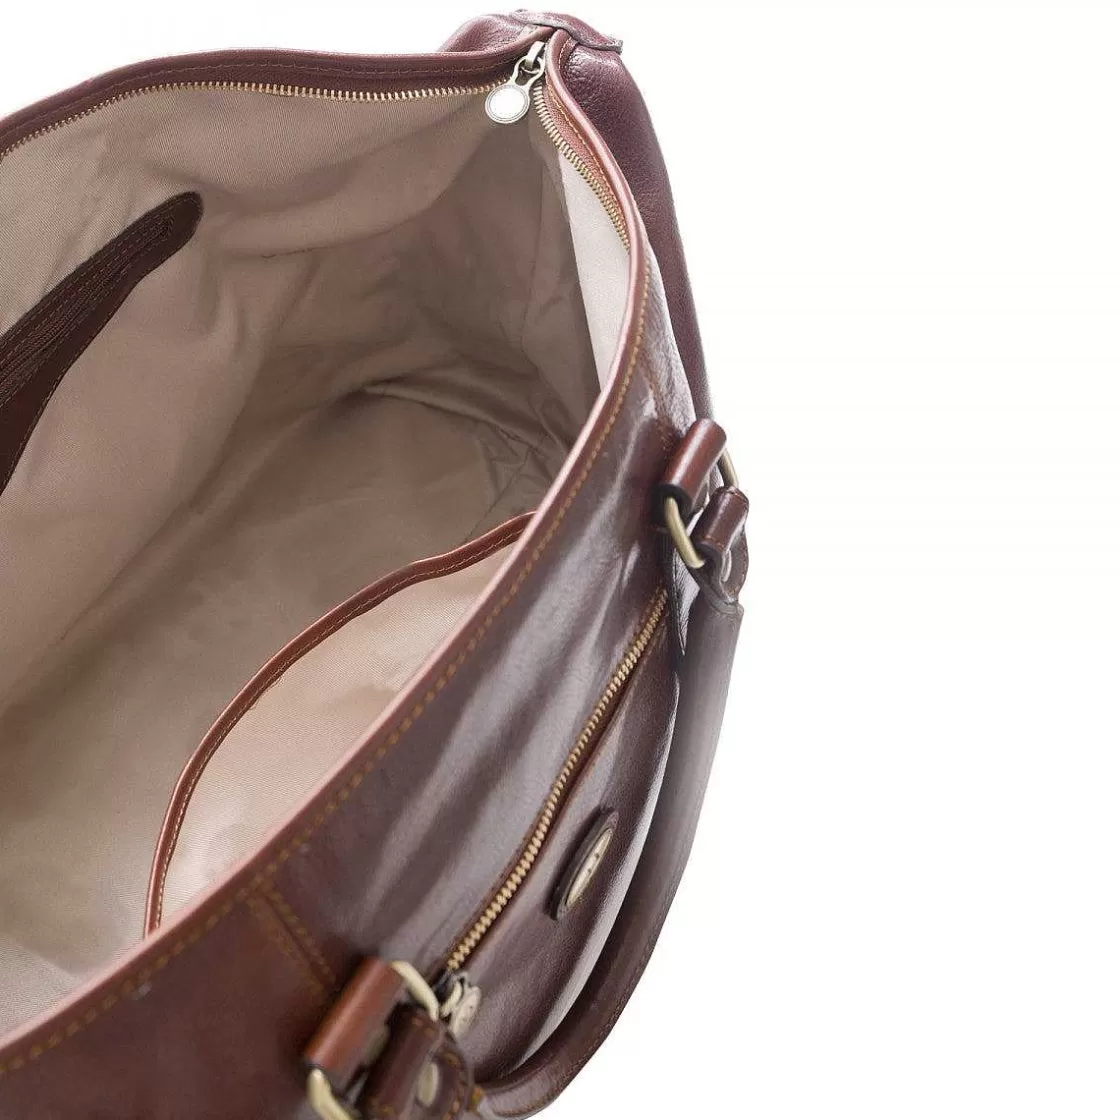 Leonardo Travel Bag In Full Grain Leather Double Zip Inside Pocket Adjustable Shoulder Strap Cheap